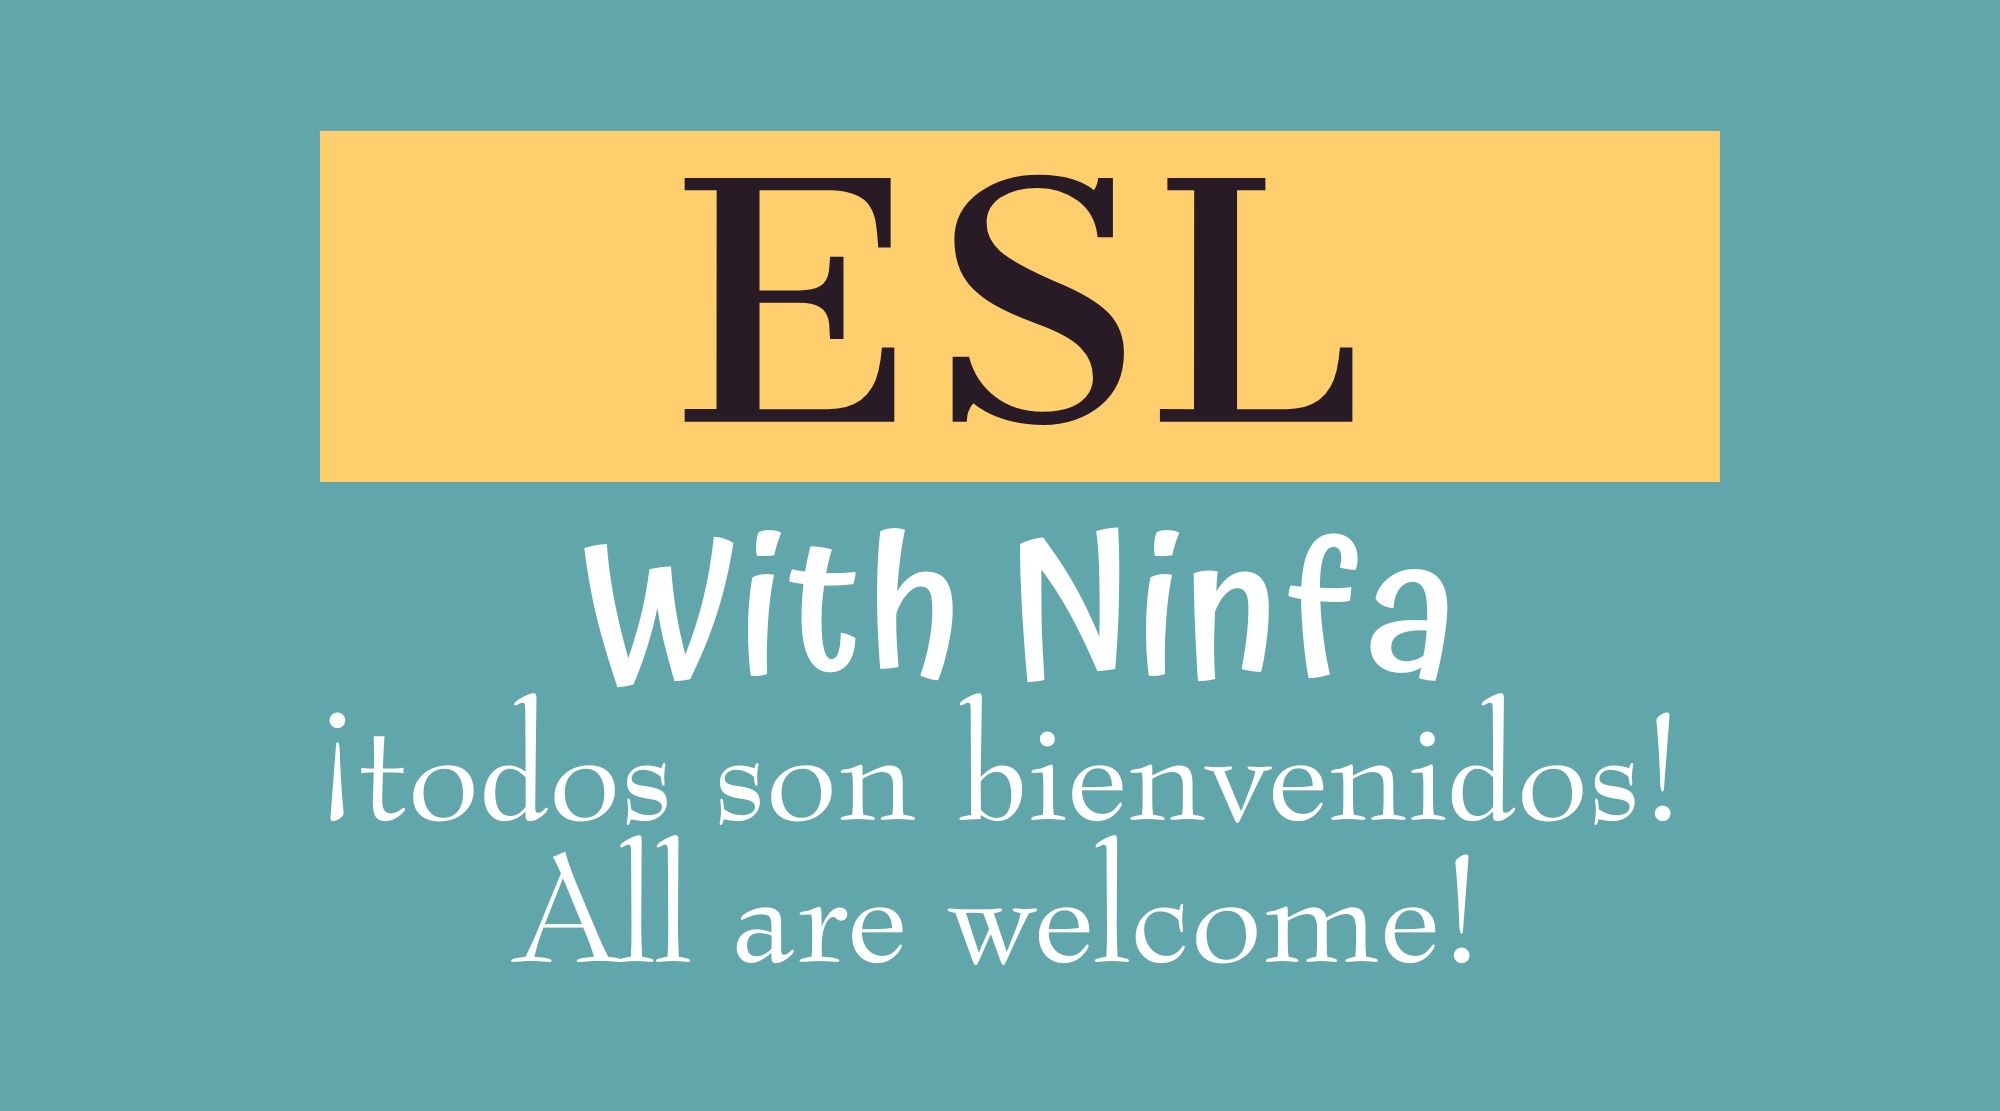 ESL with Ninfa: Beginner Level